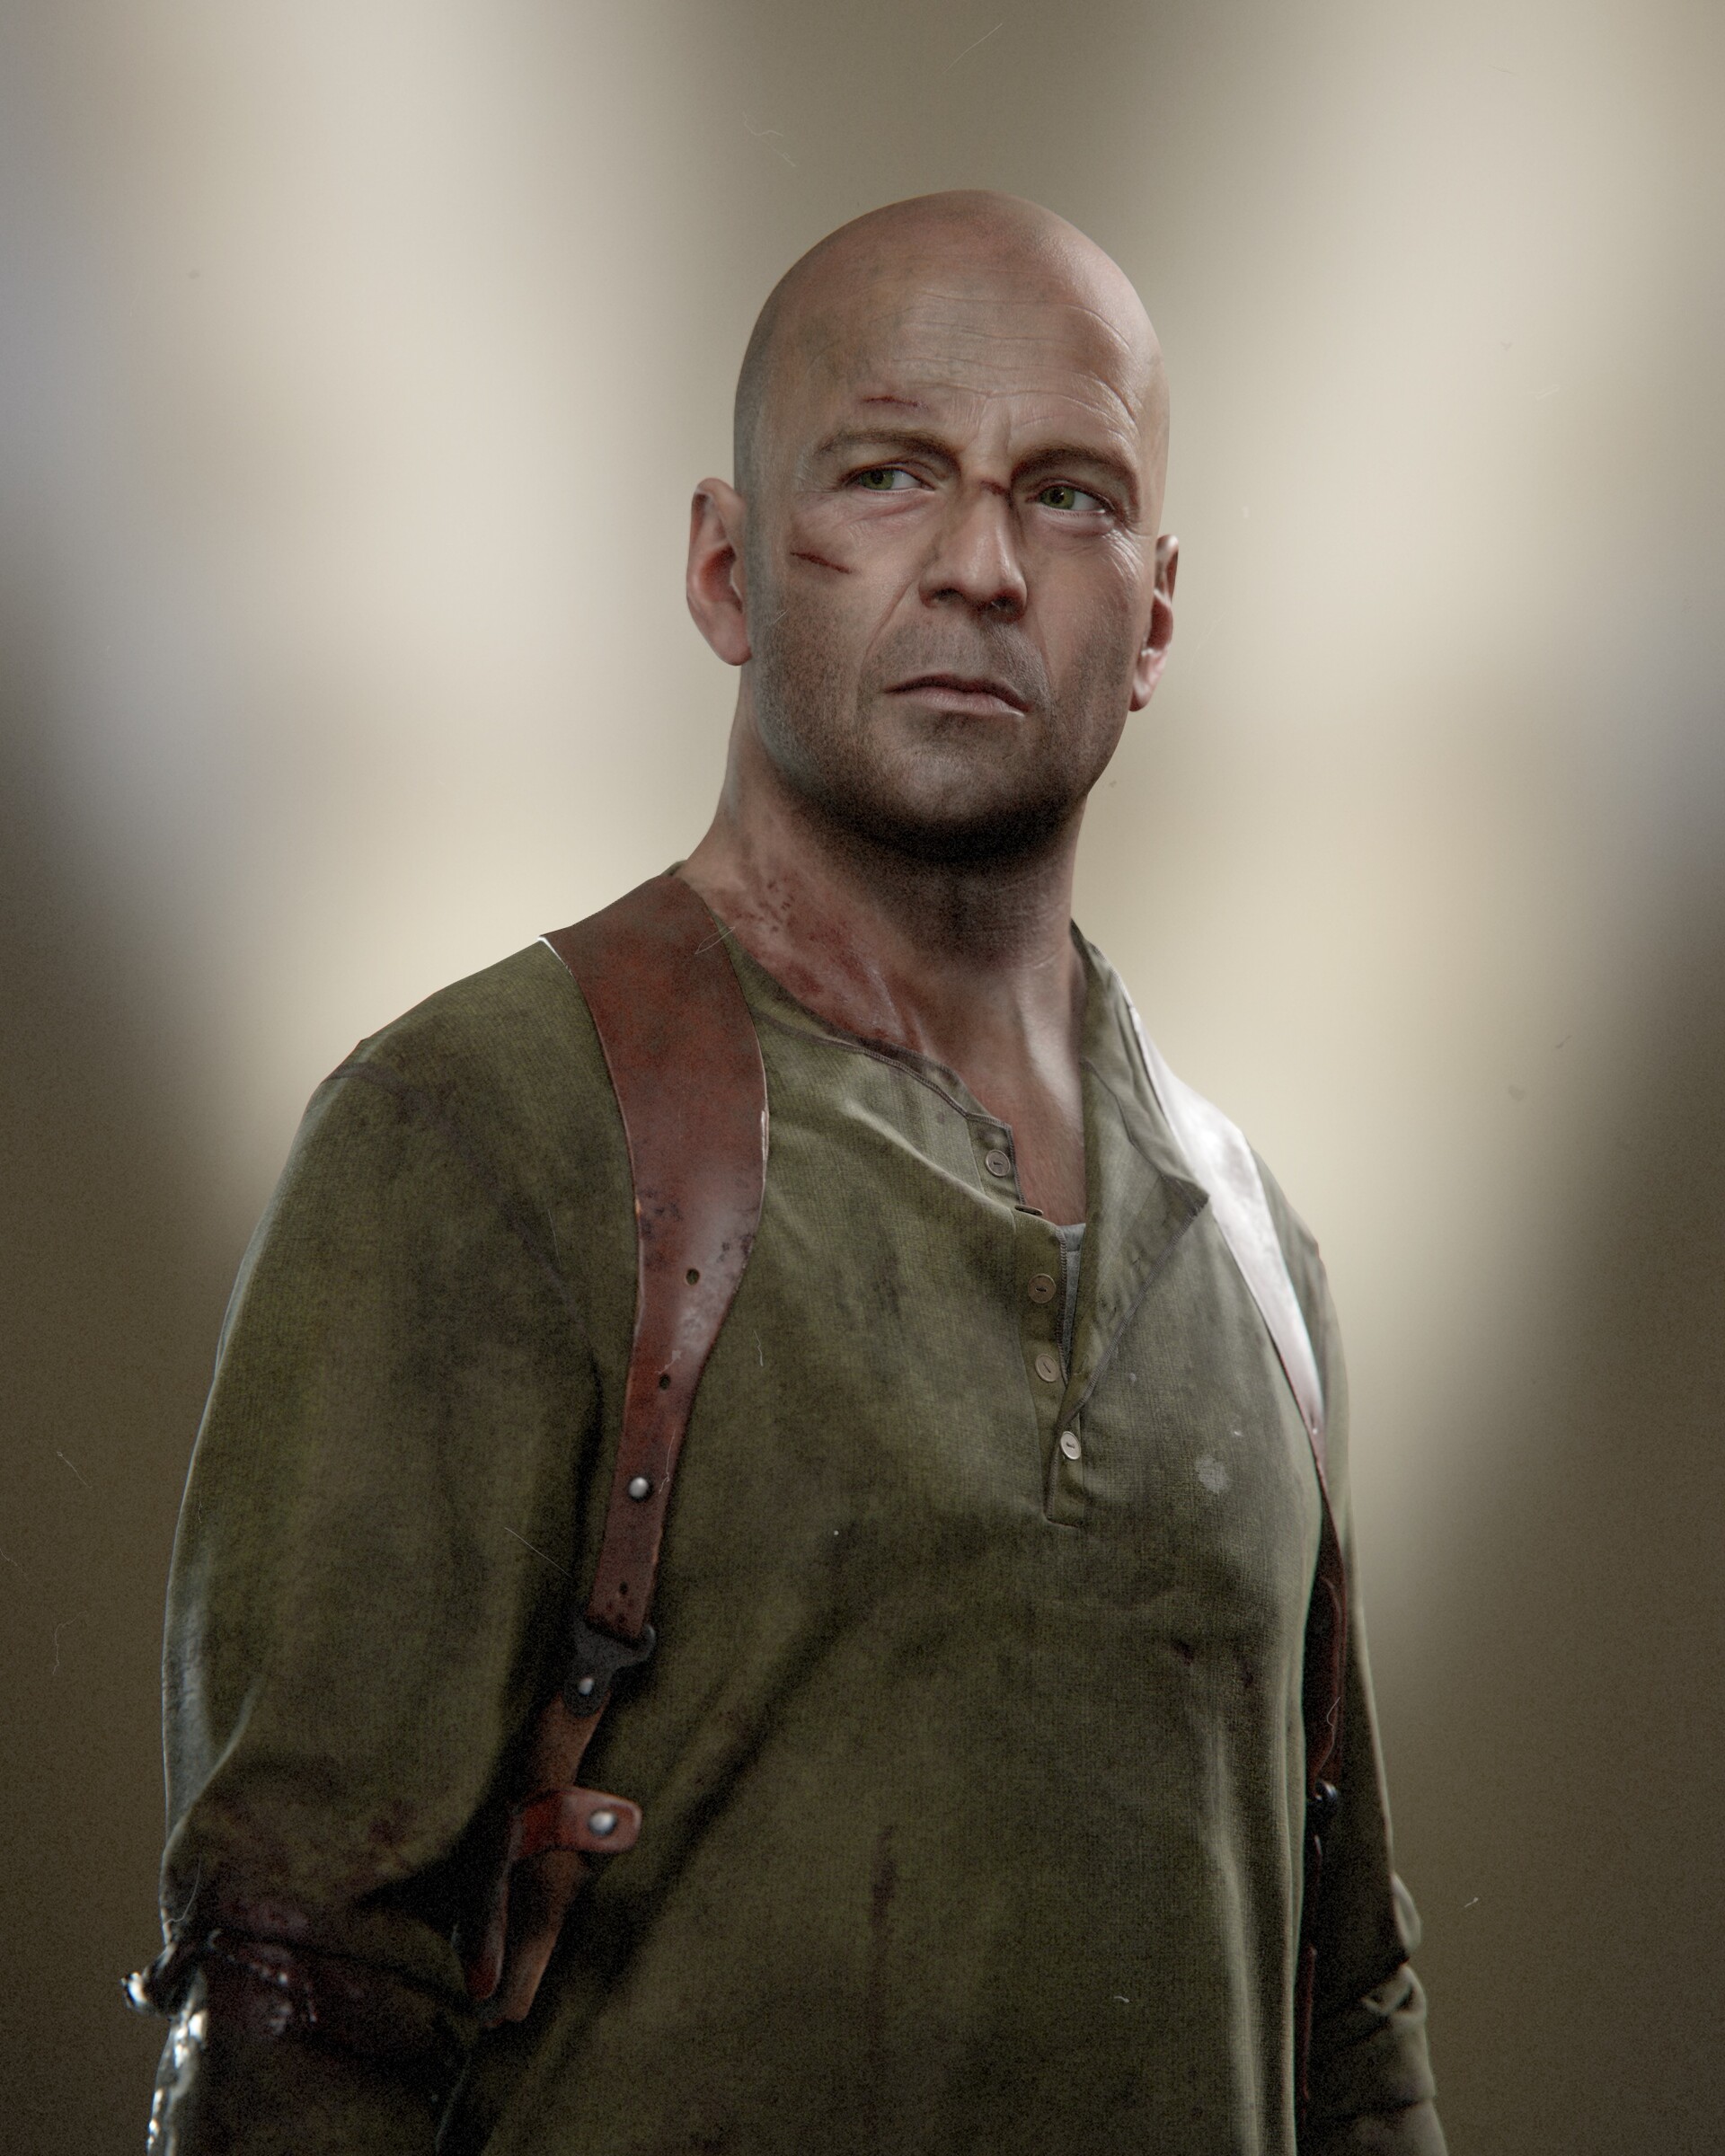 Die Hard Video Games: Exploring John McClane's Virtual Exploits - CDKeys  Blog